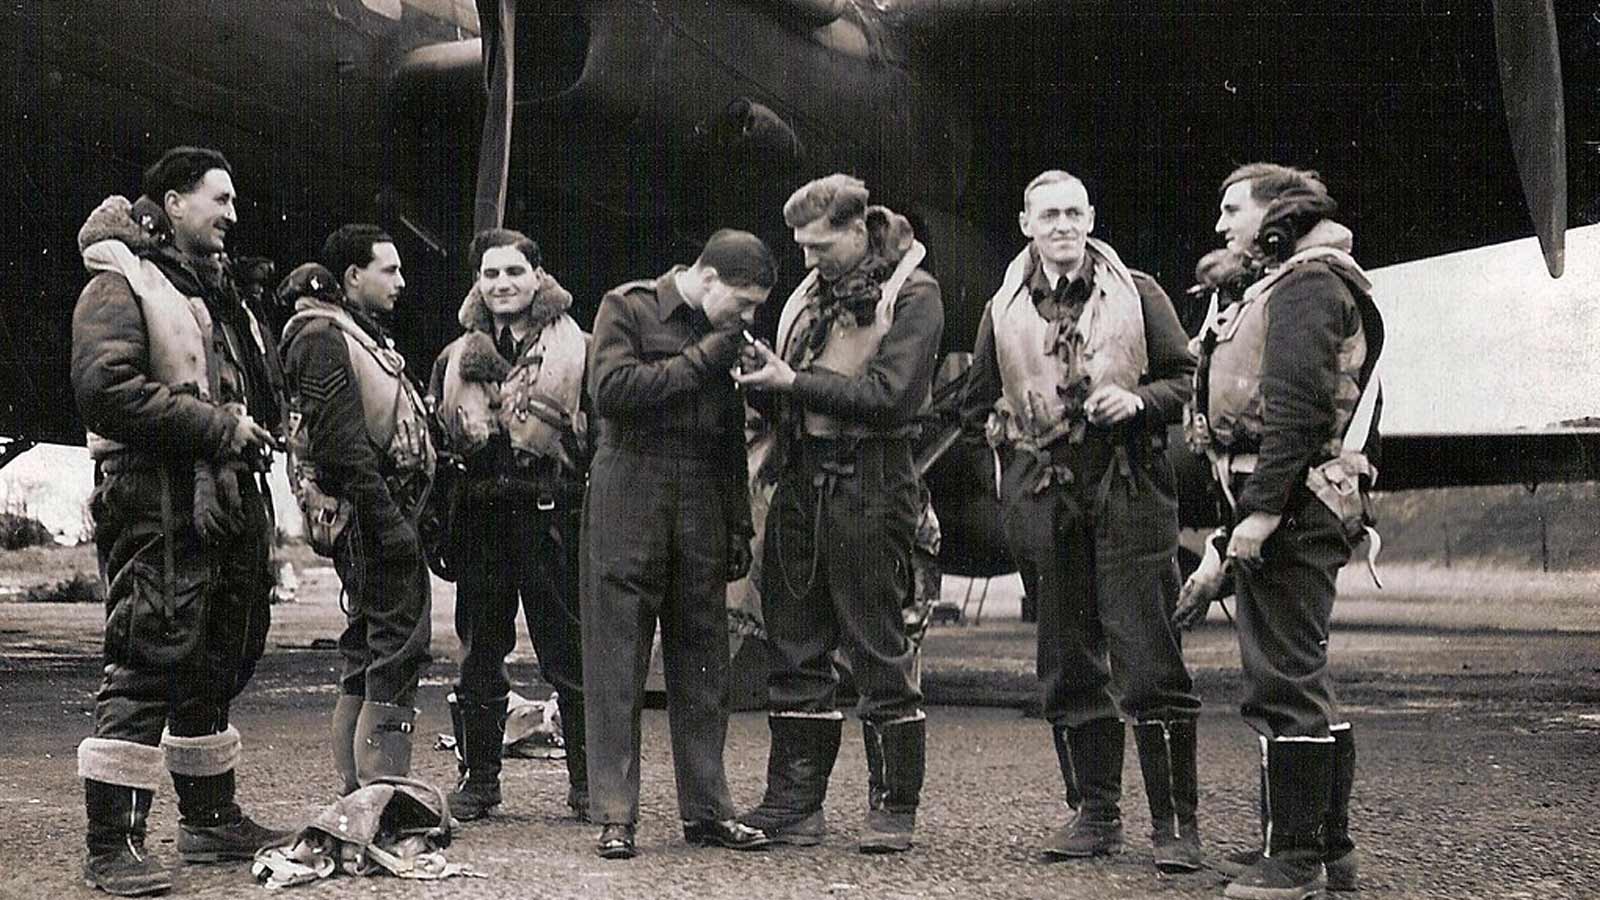 Remembering Bomber Command